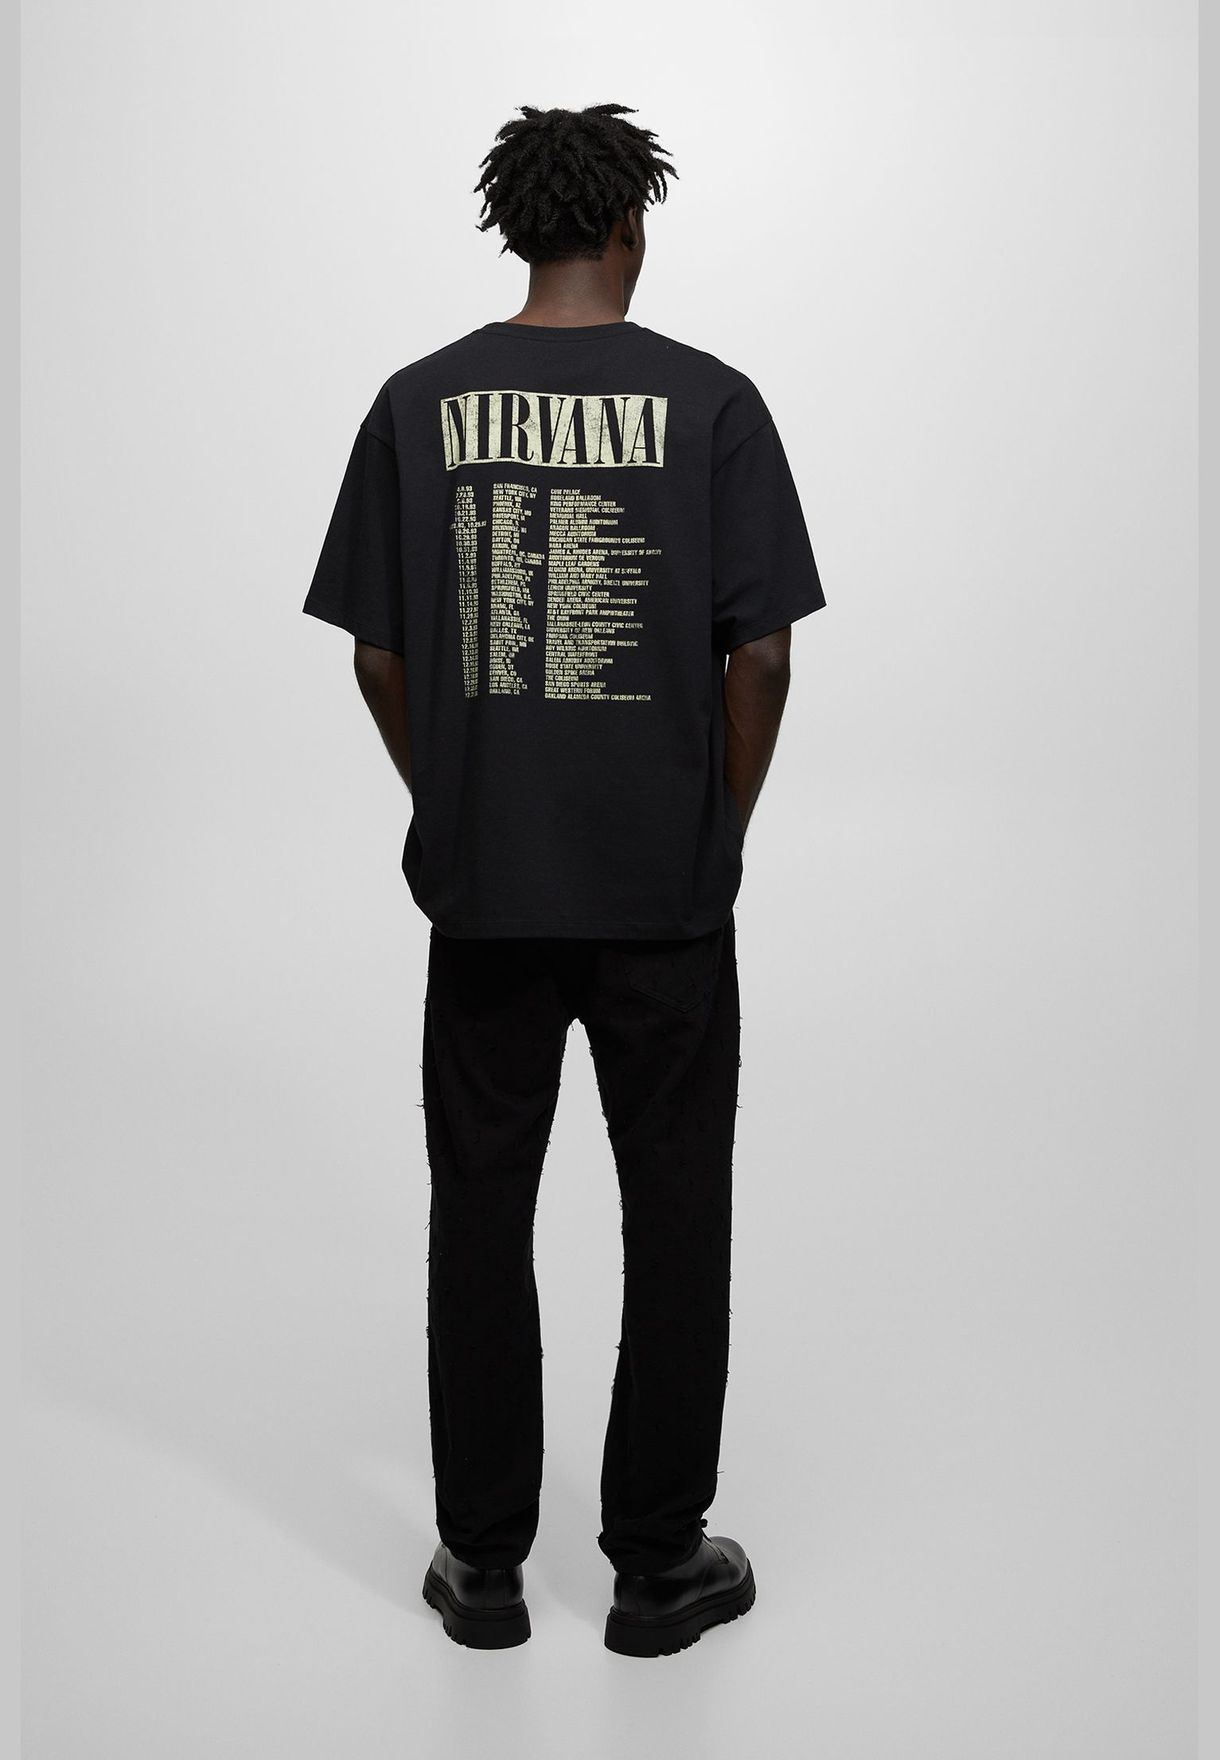 Black T-shirt with Nirvana logo